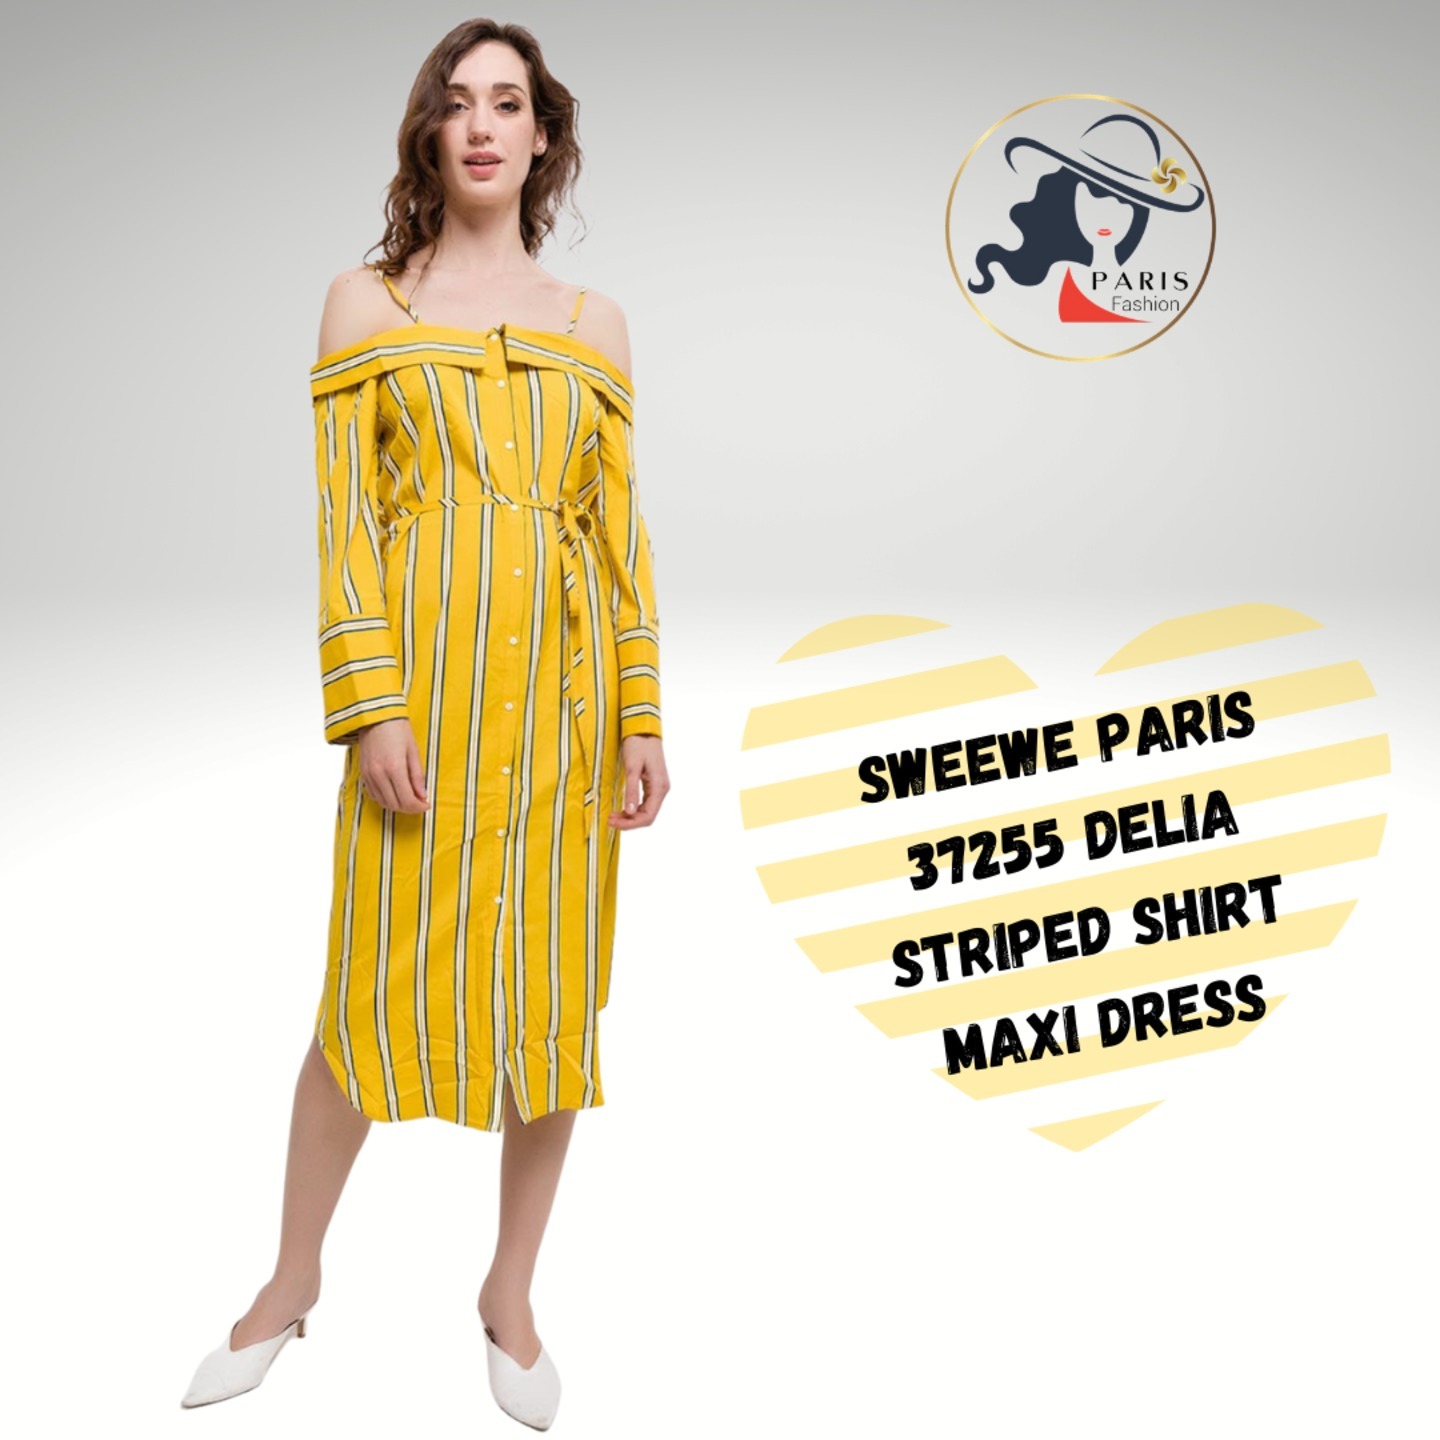 SWEEWE PARIS 37255 DELIA STRIPED SHIRT MAXI DRESS